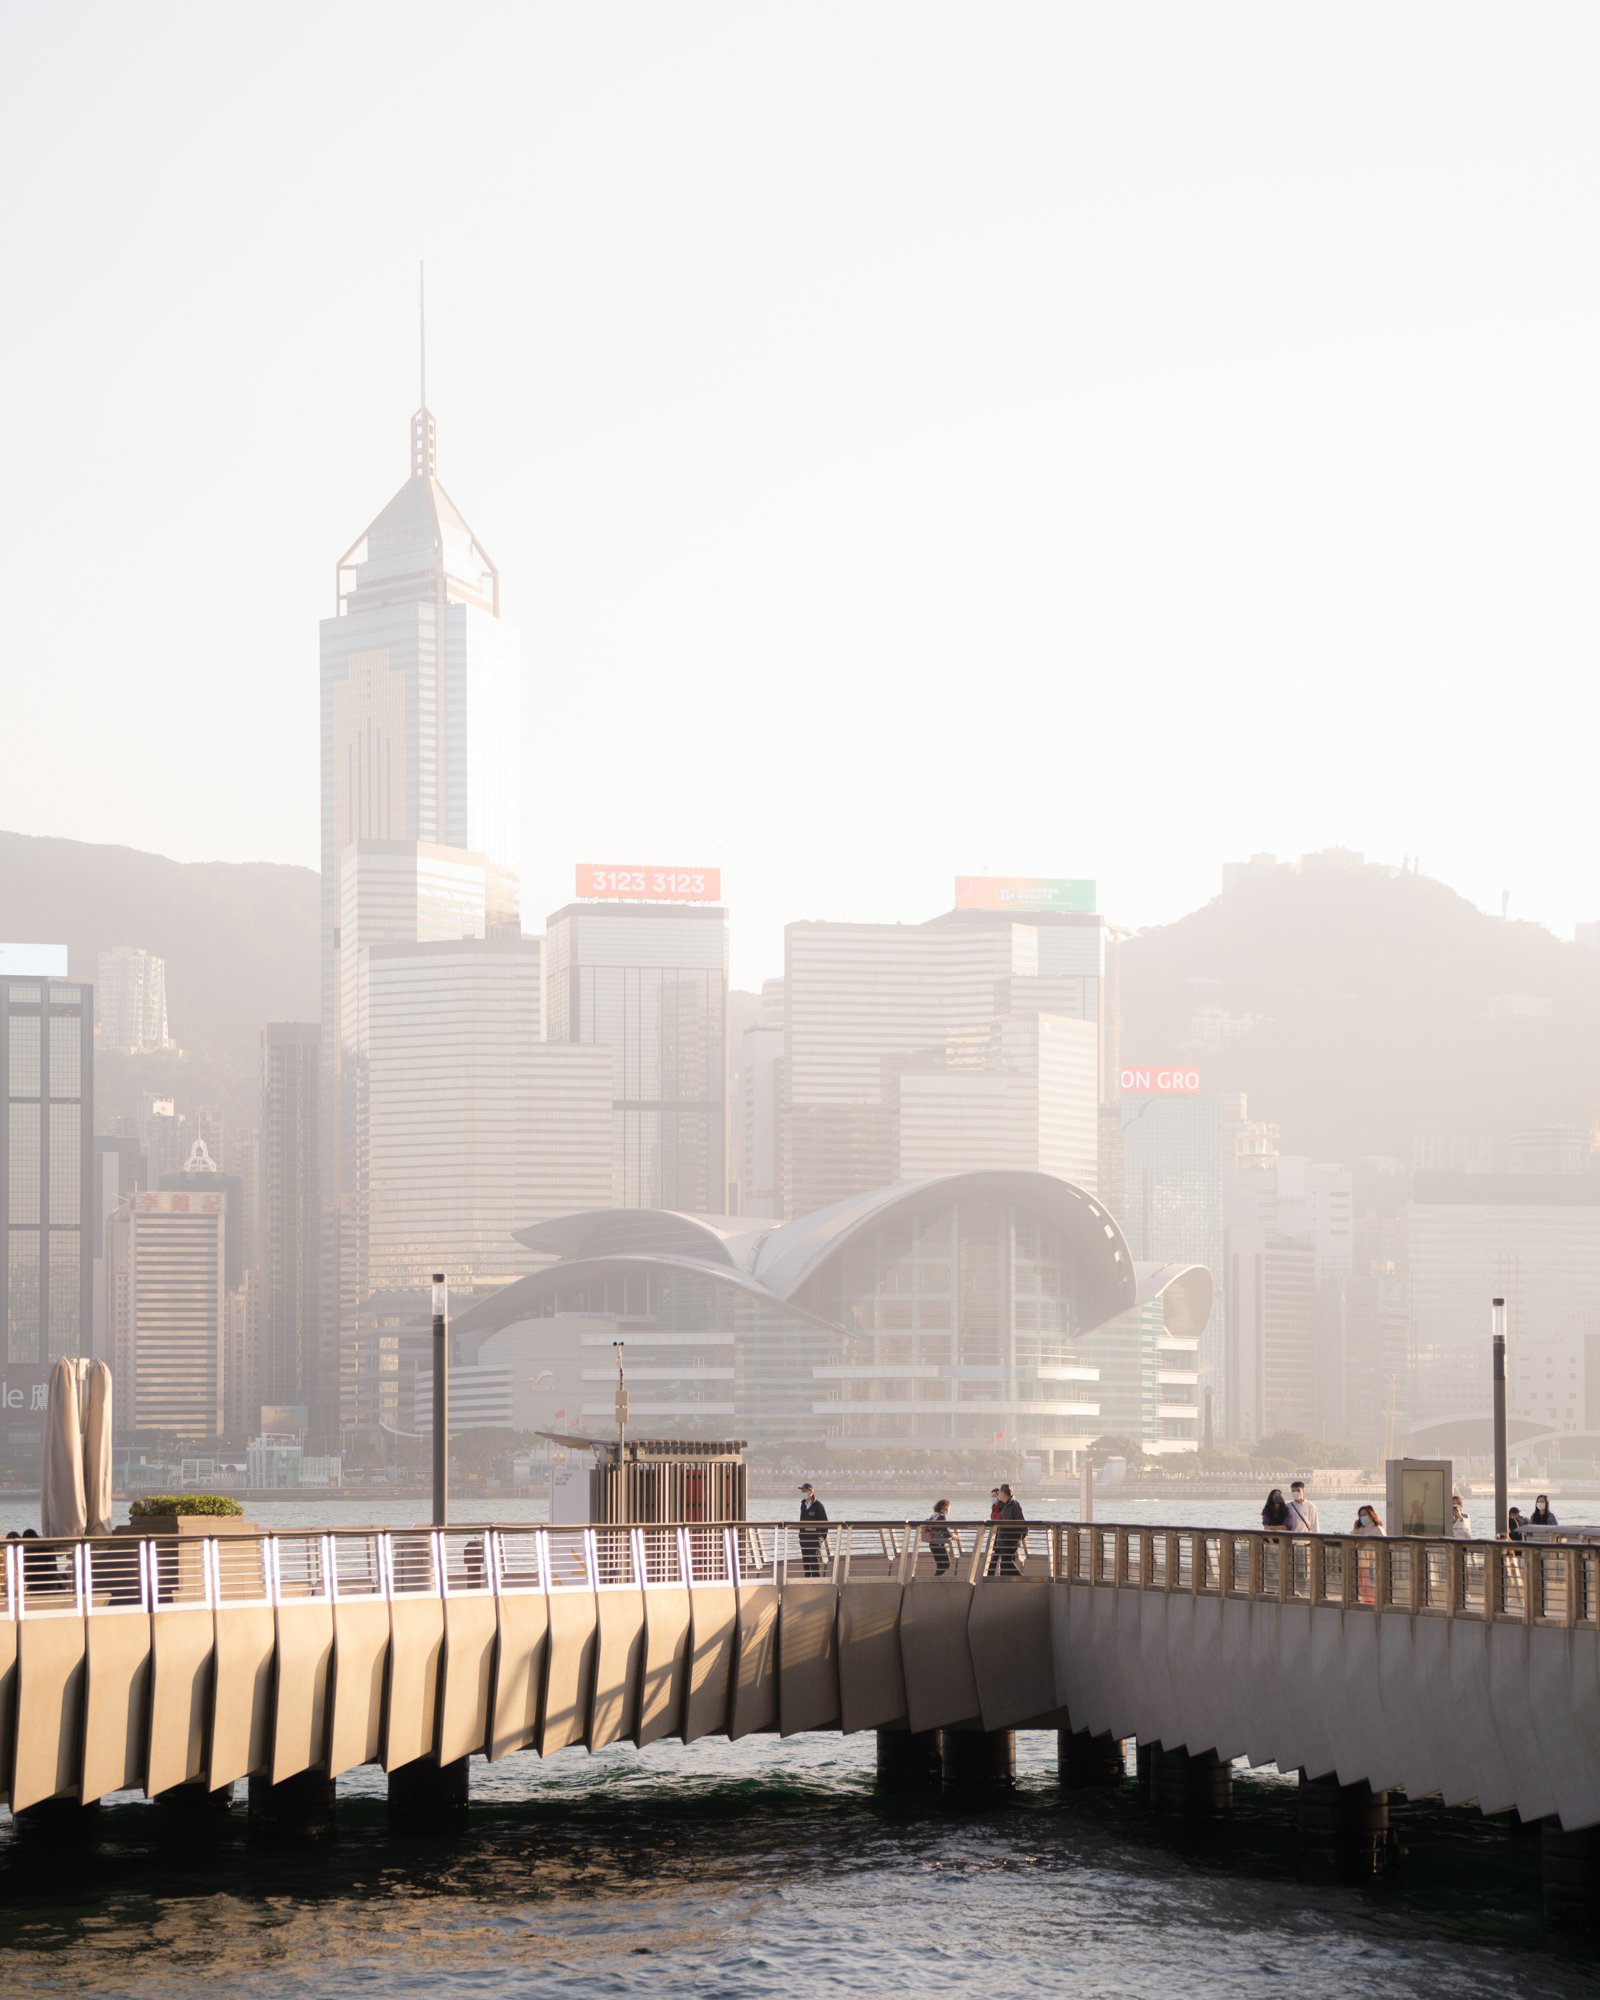  Victoria Dockside Promenade Design by James Corner Field Operations Hong Kong  